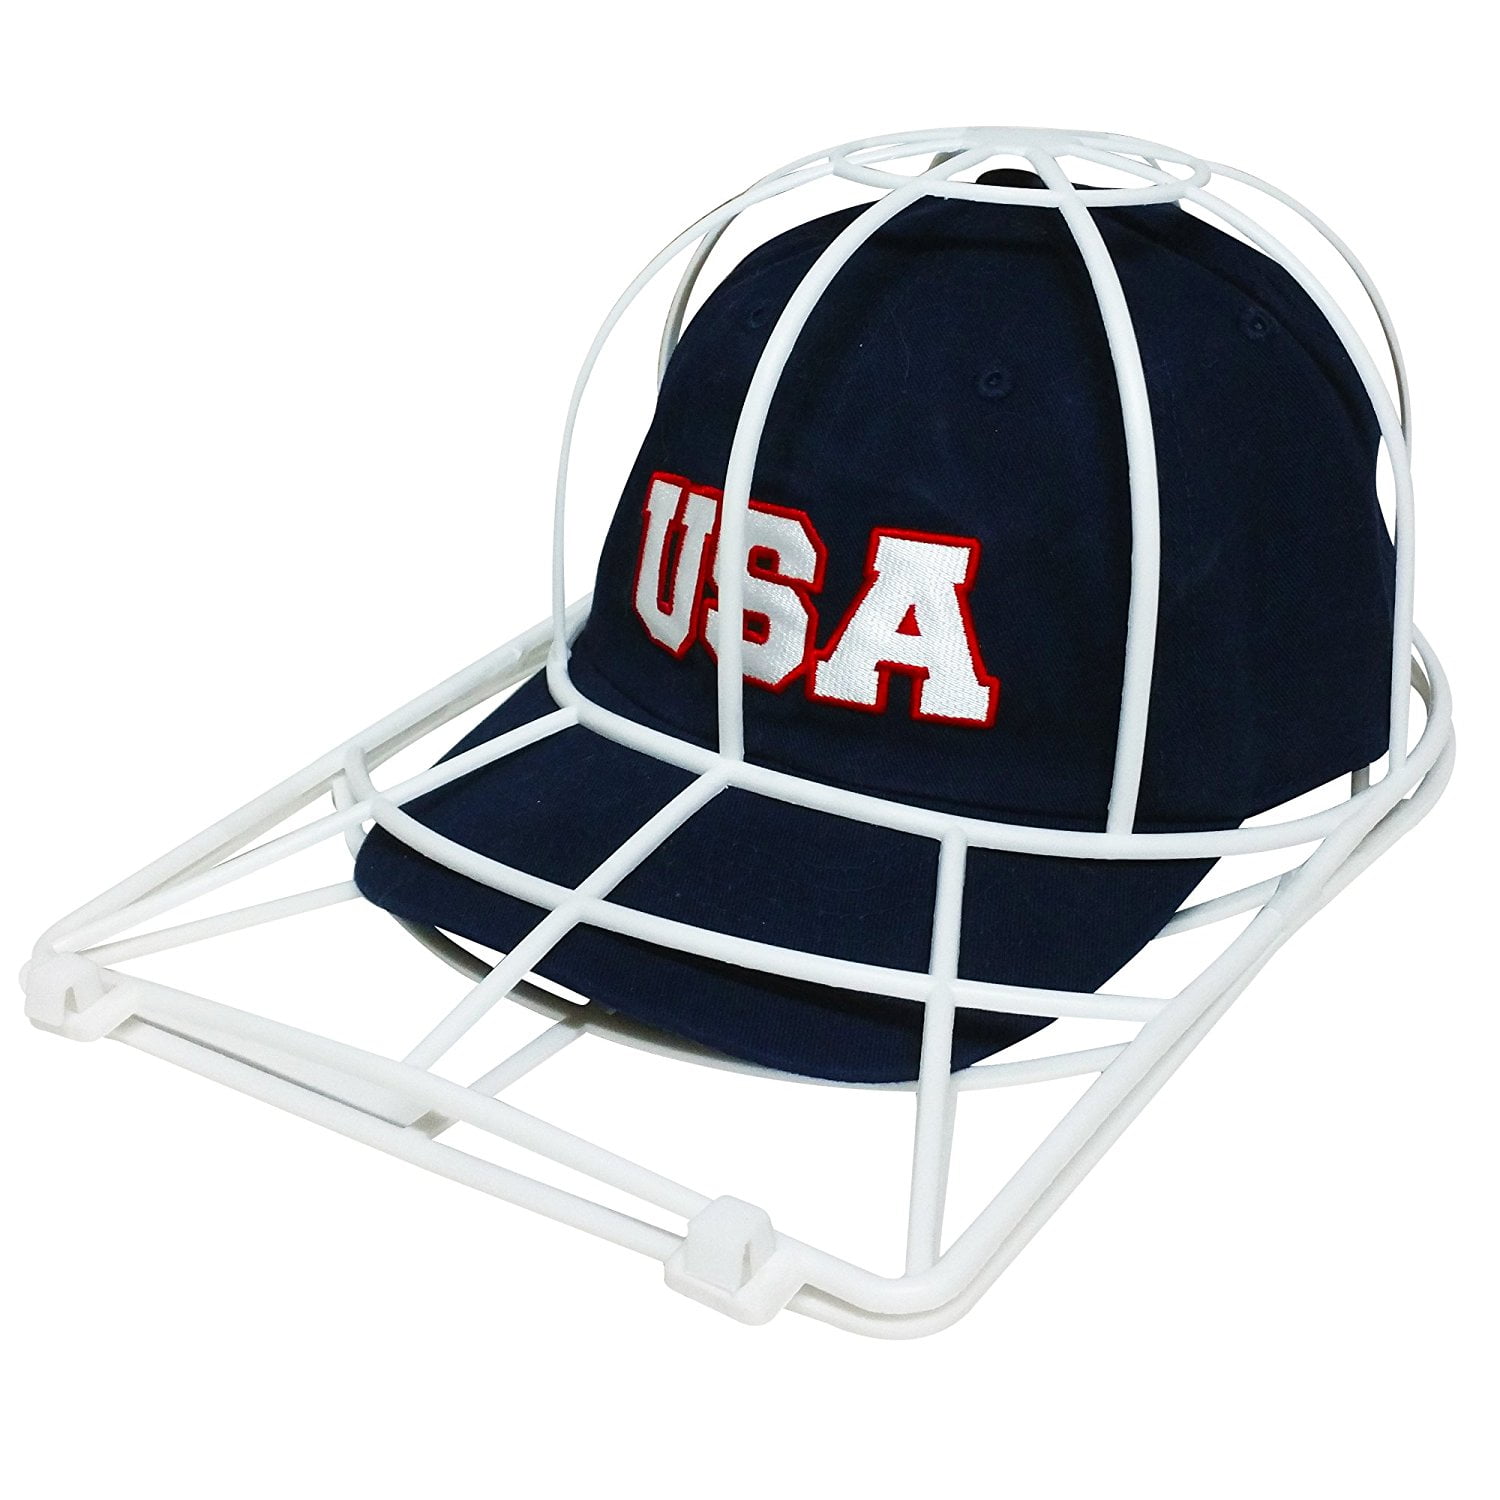 Cap Washing Cage Baseball Ball cap Hat Washer Frame Hat Shaper Drying Race neF*. 